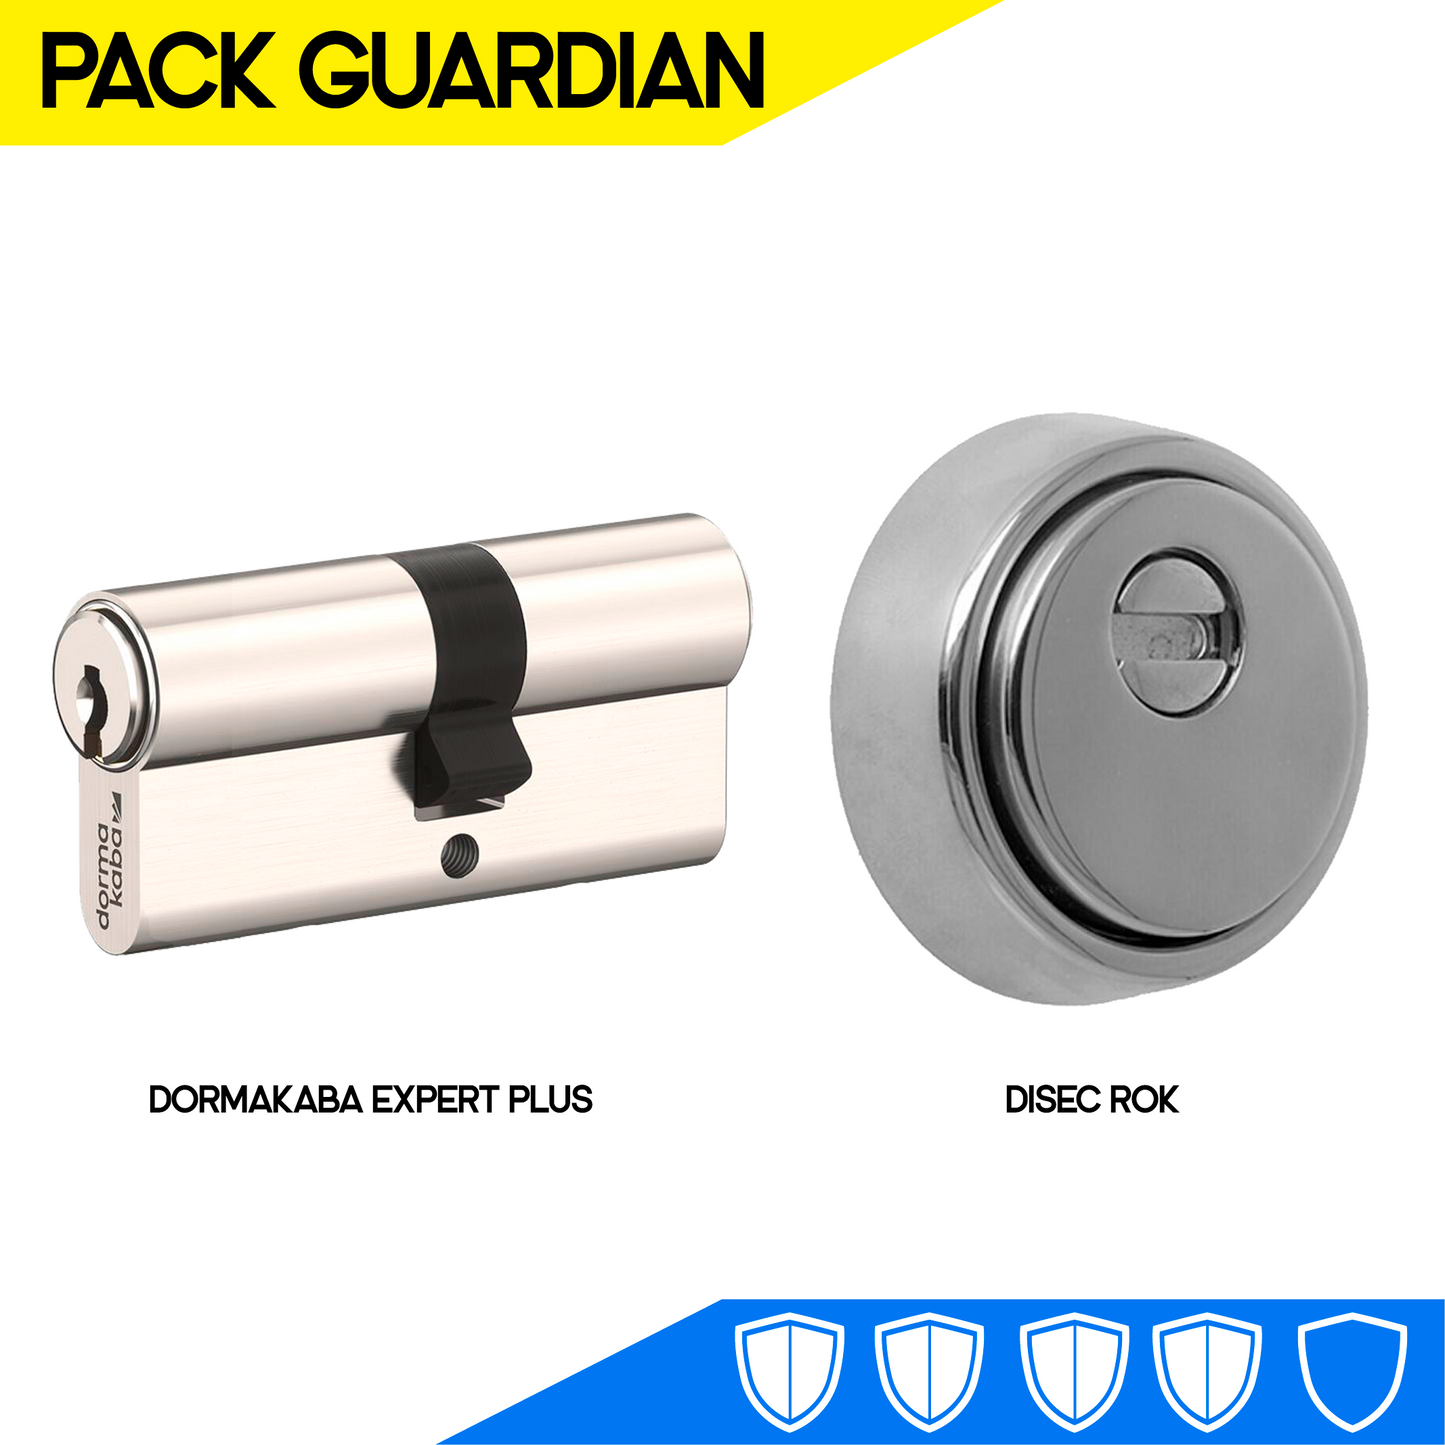 Pack de seguridad Guardian (Kaba Expert Plus + Disec ROK)